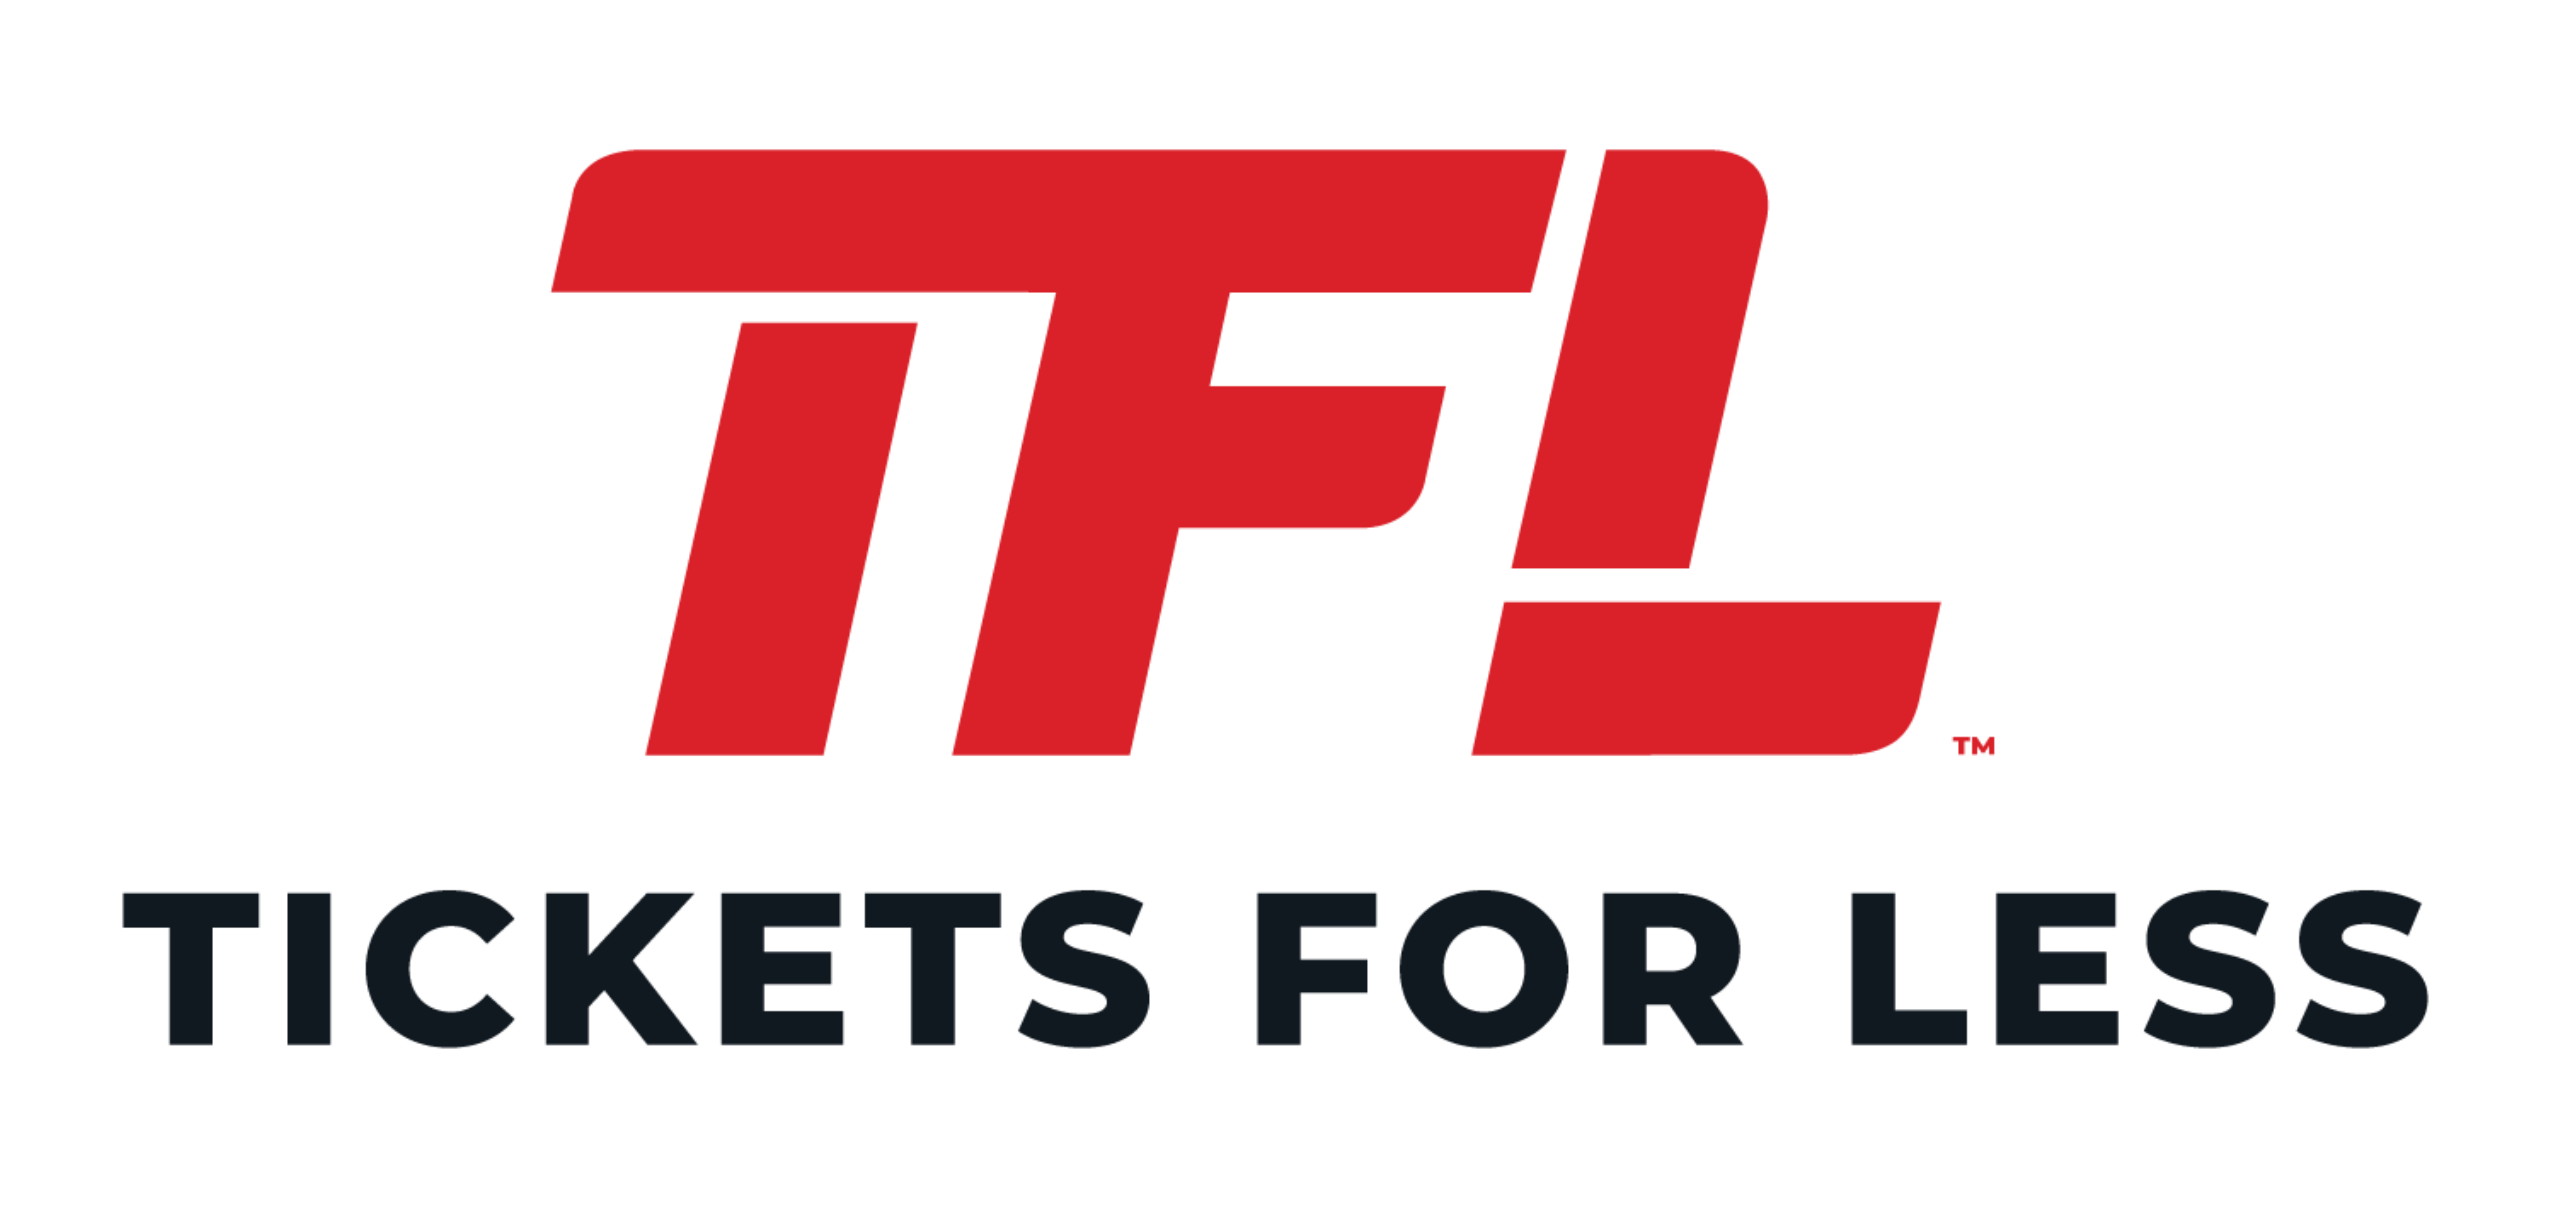 Tickets For Less LLC Logo